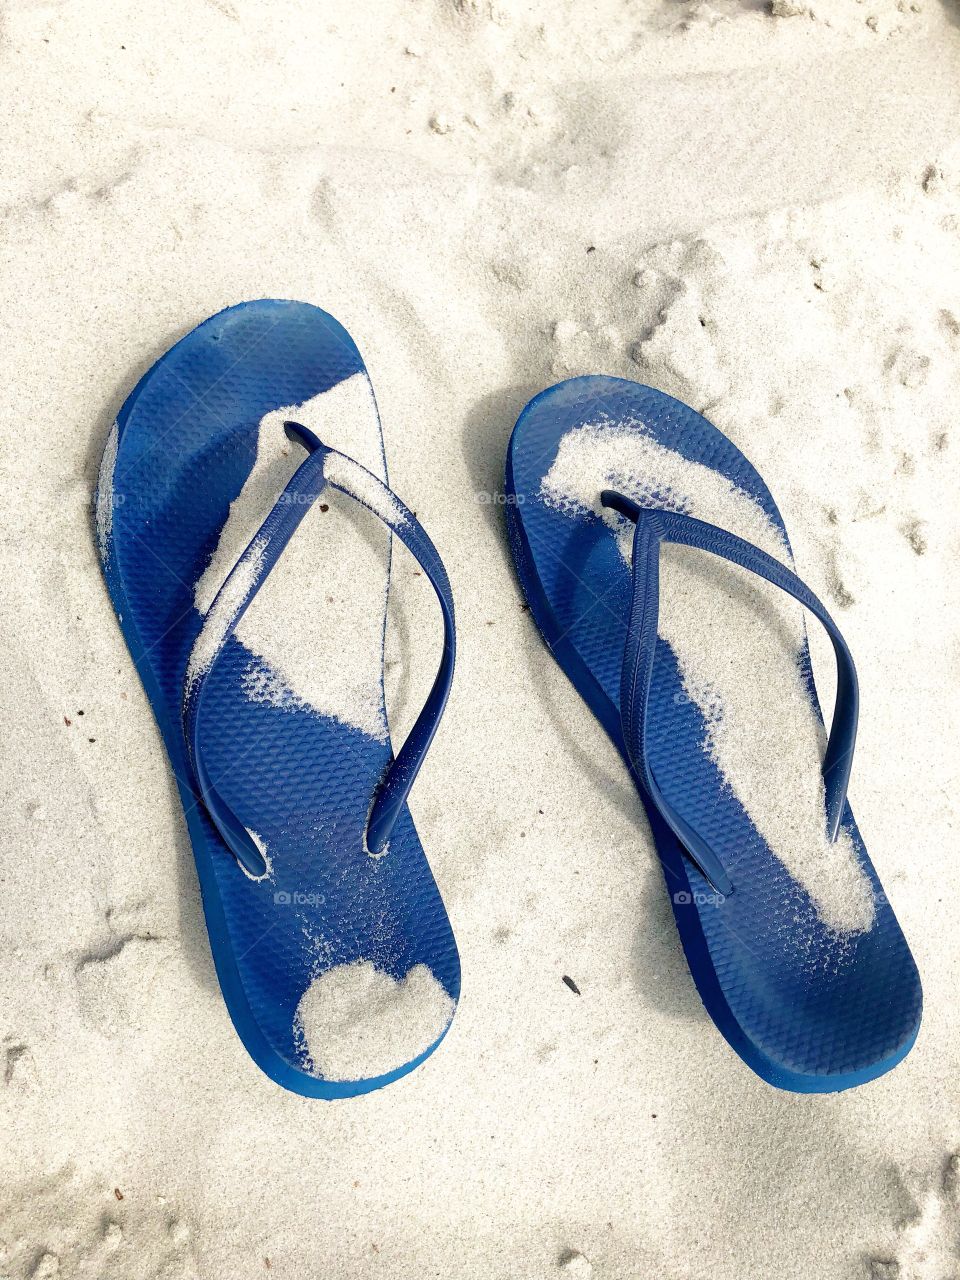 Blue flip-flops sitting in the sand.